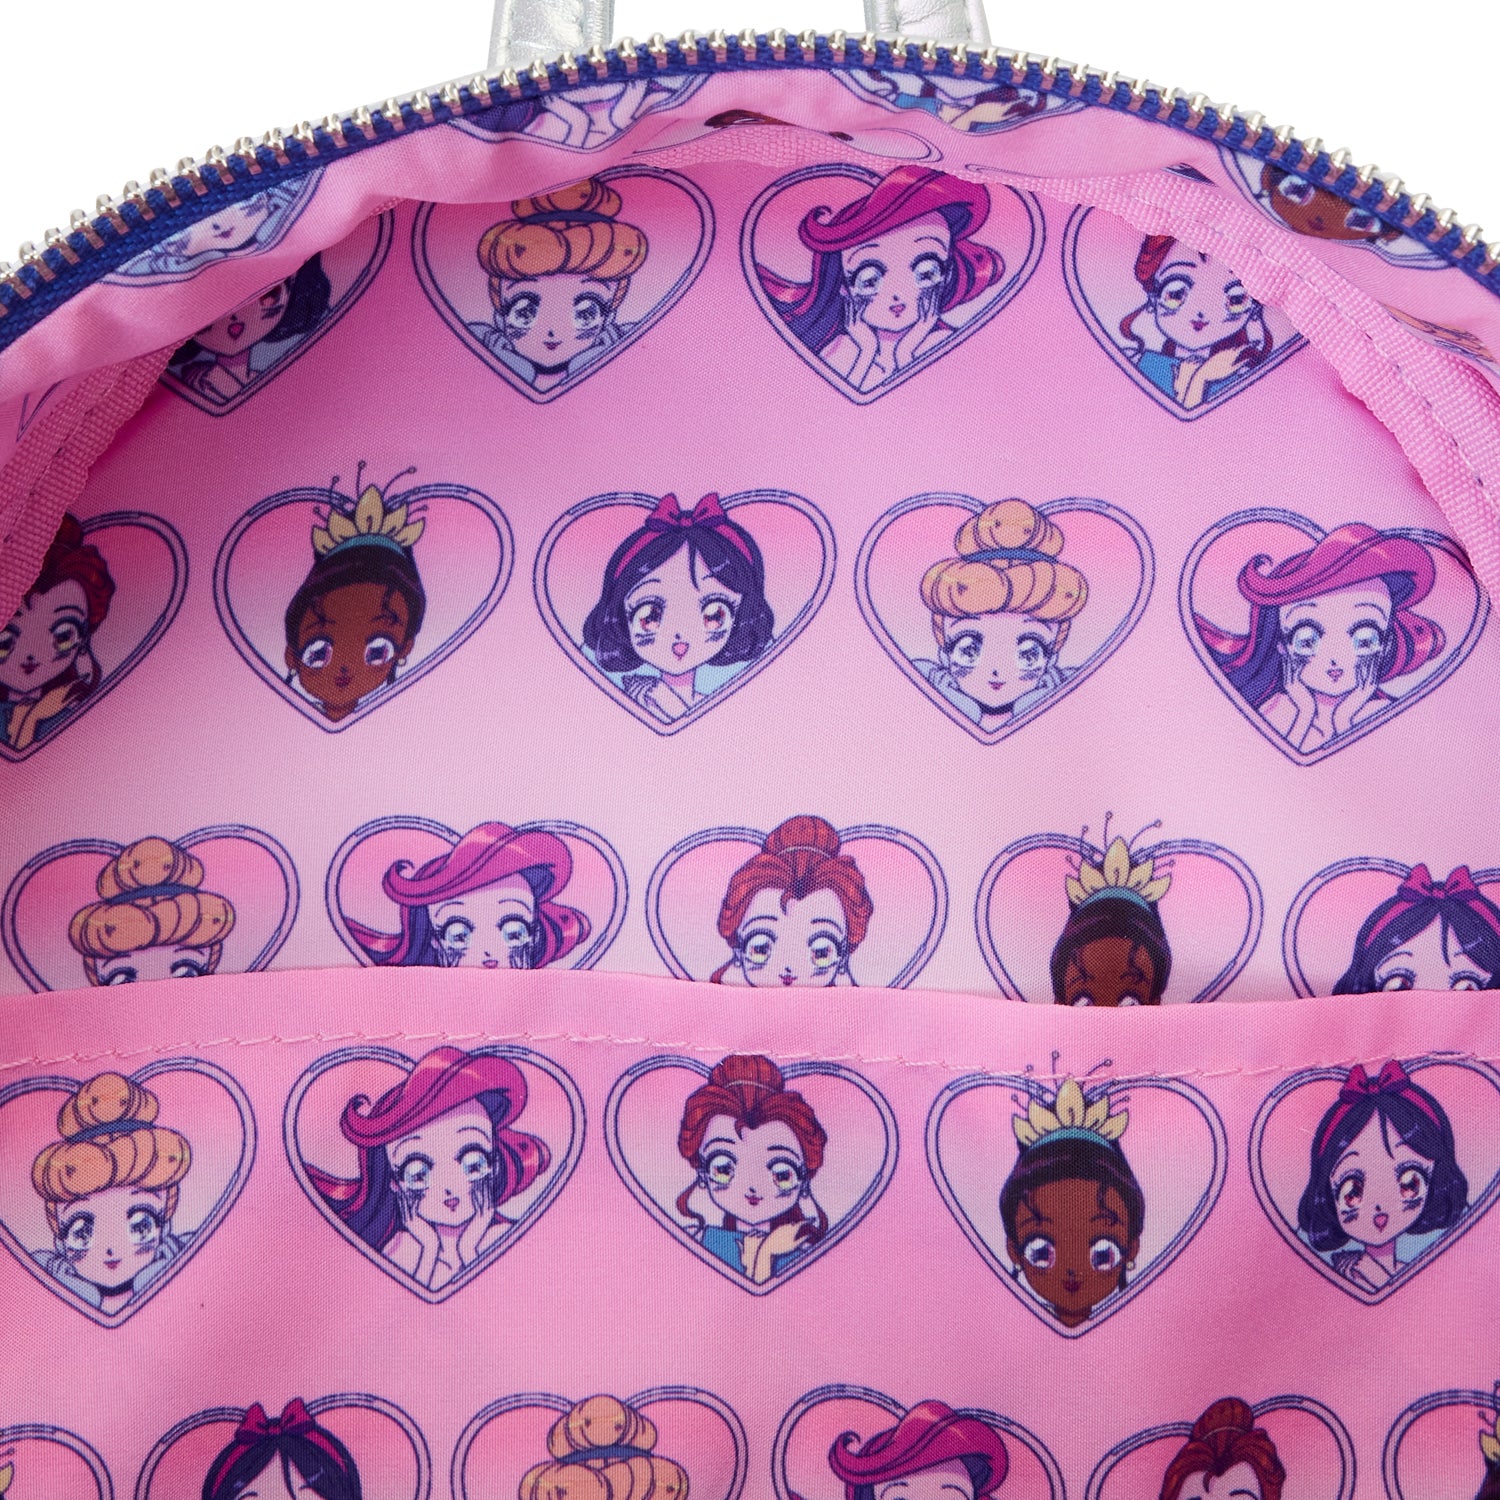 Disney | Manga Style Princesses Mini Backpack